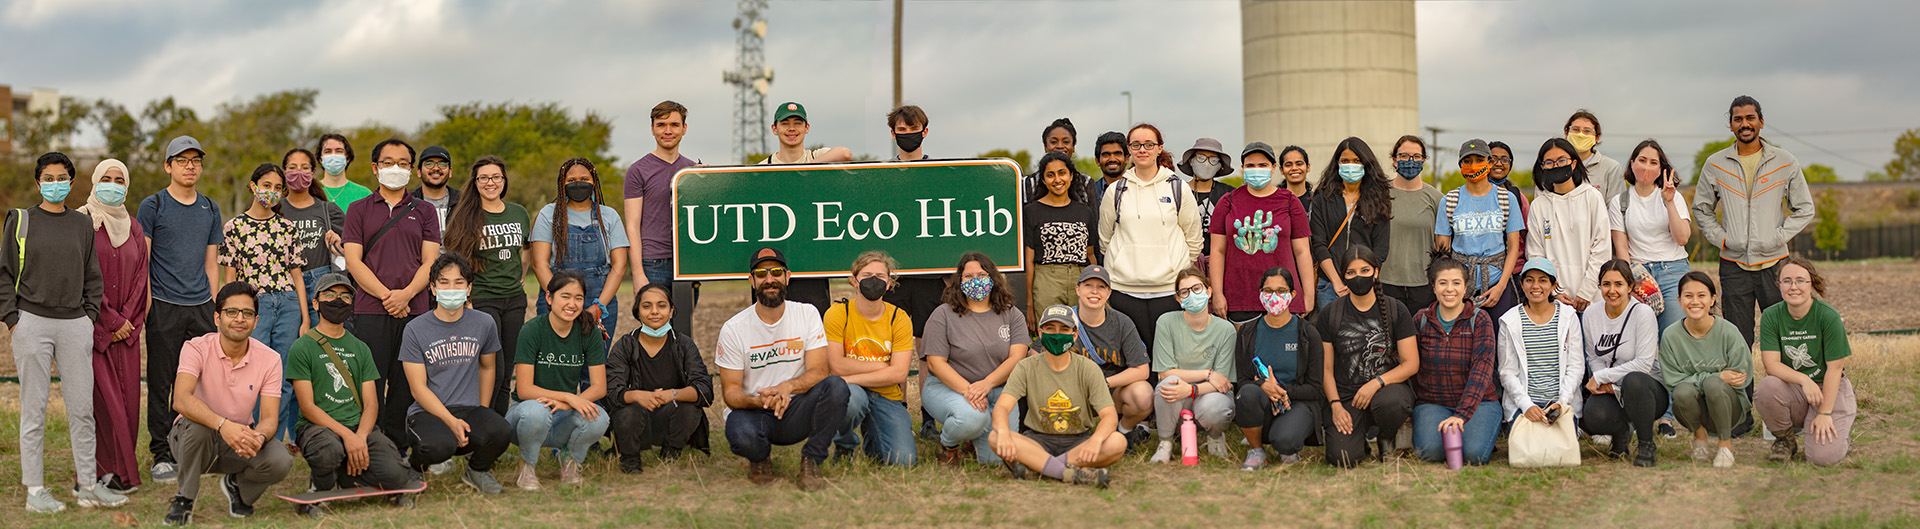 Dozens of Eco Hub students gathered around a green UTD Eco Hub sign. 